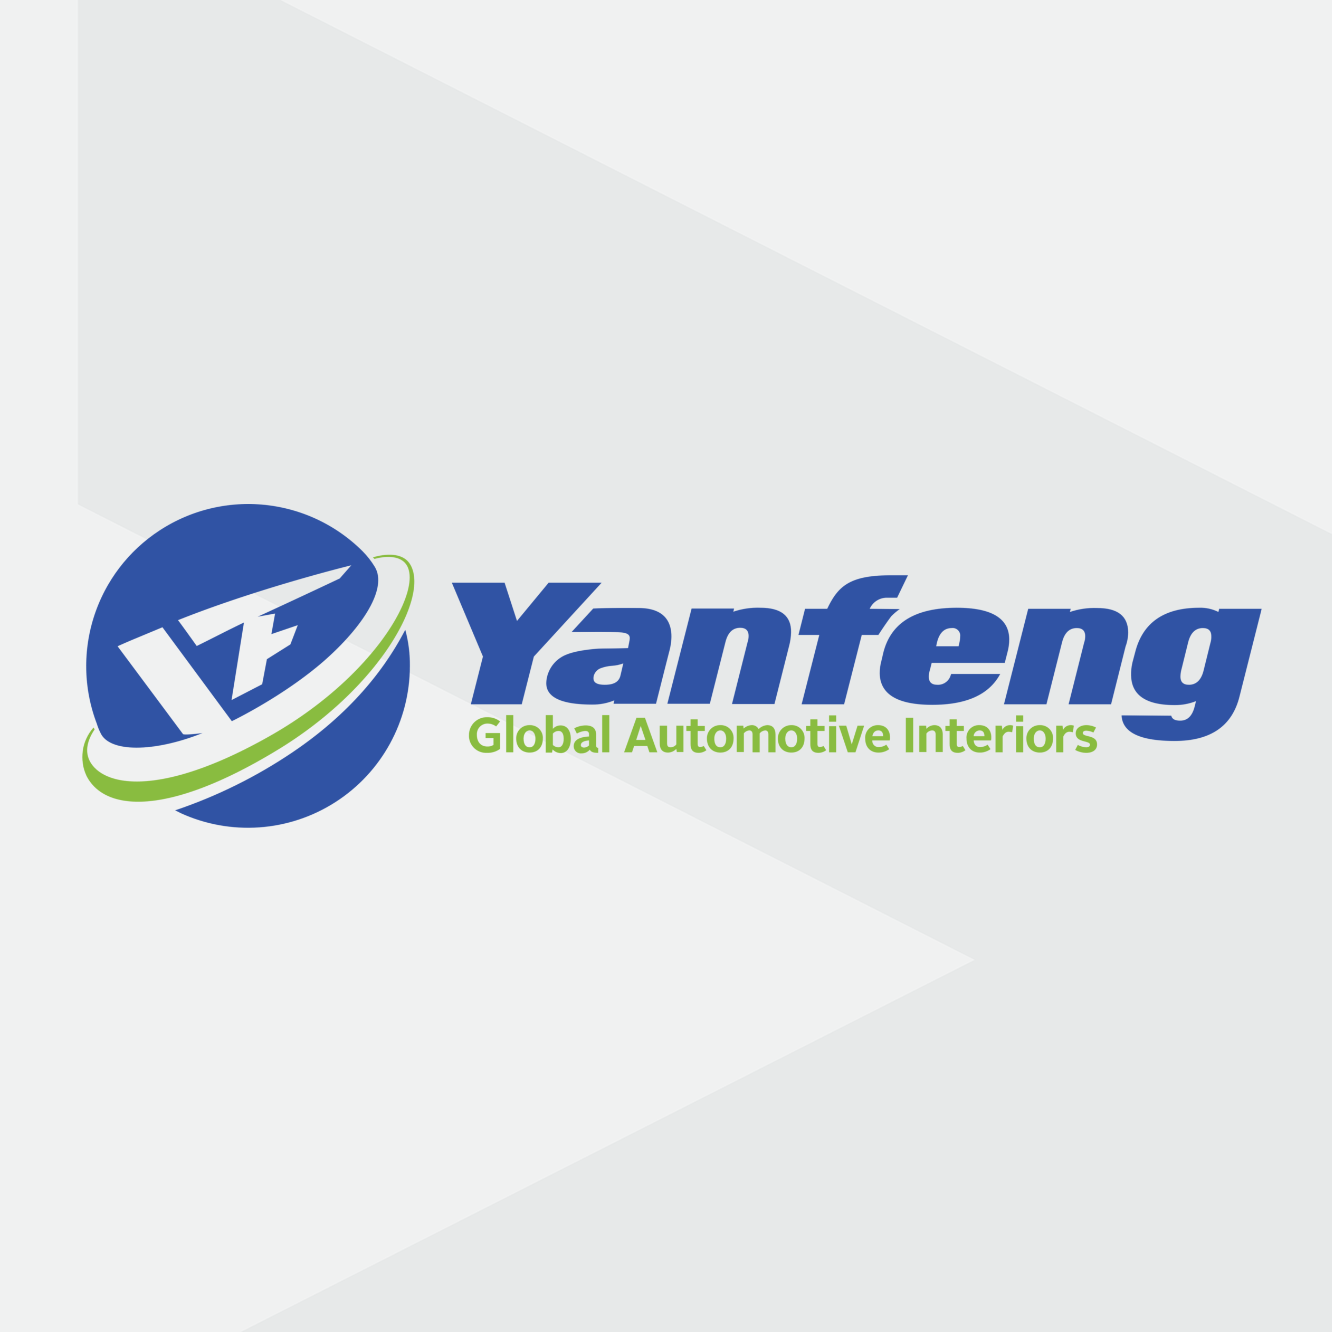 Yanfeng Automotive Interiors case study